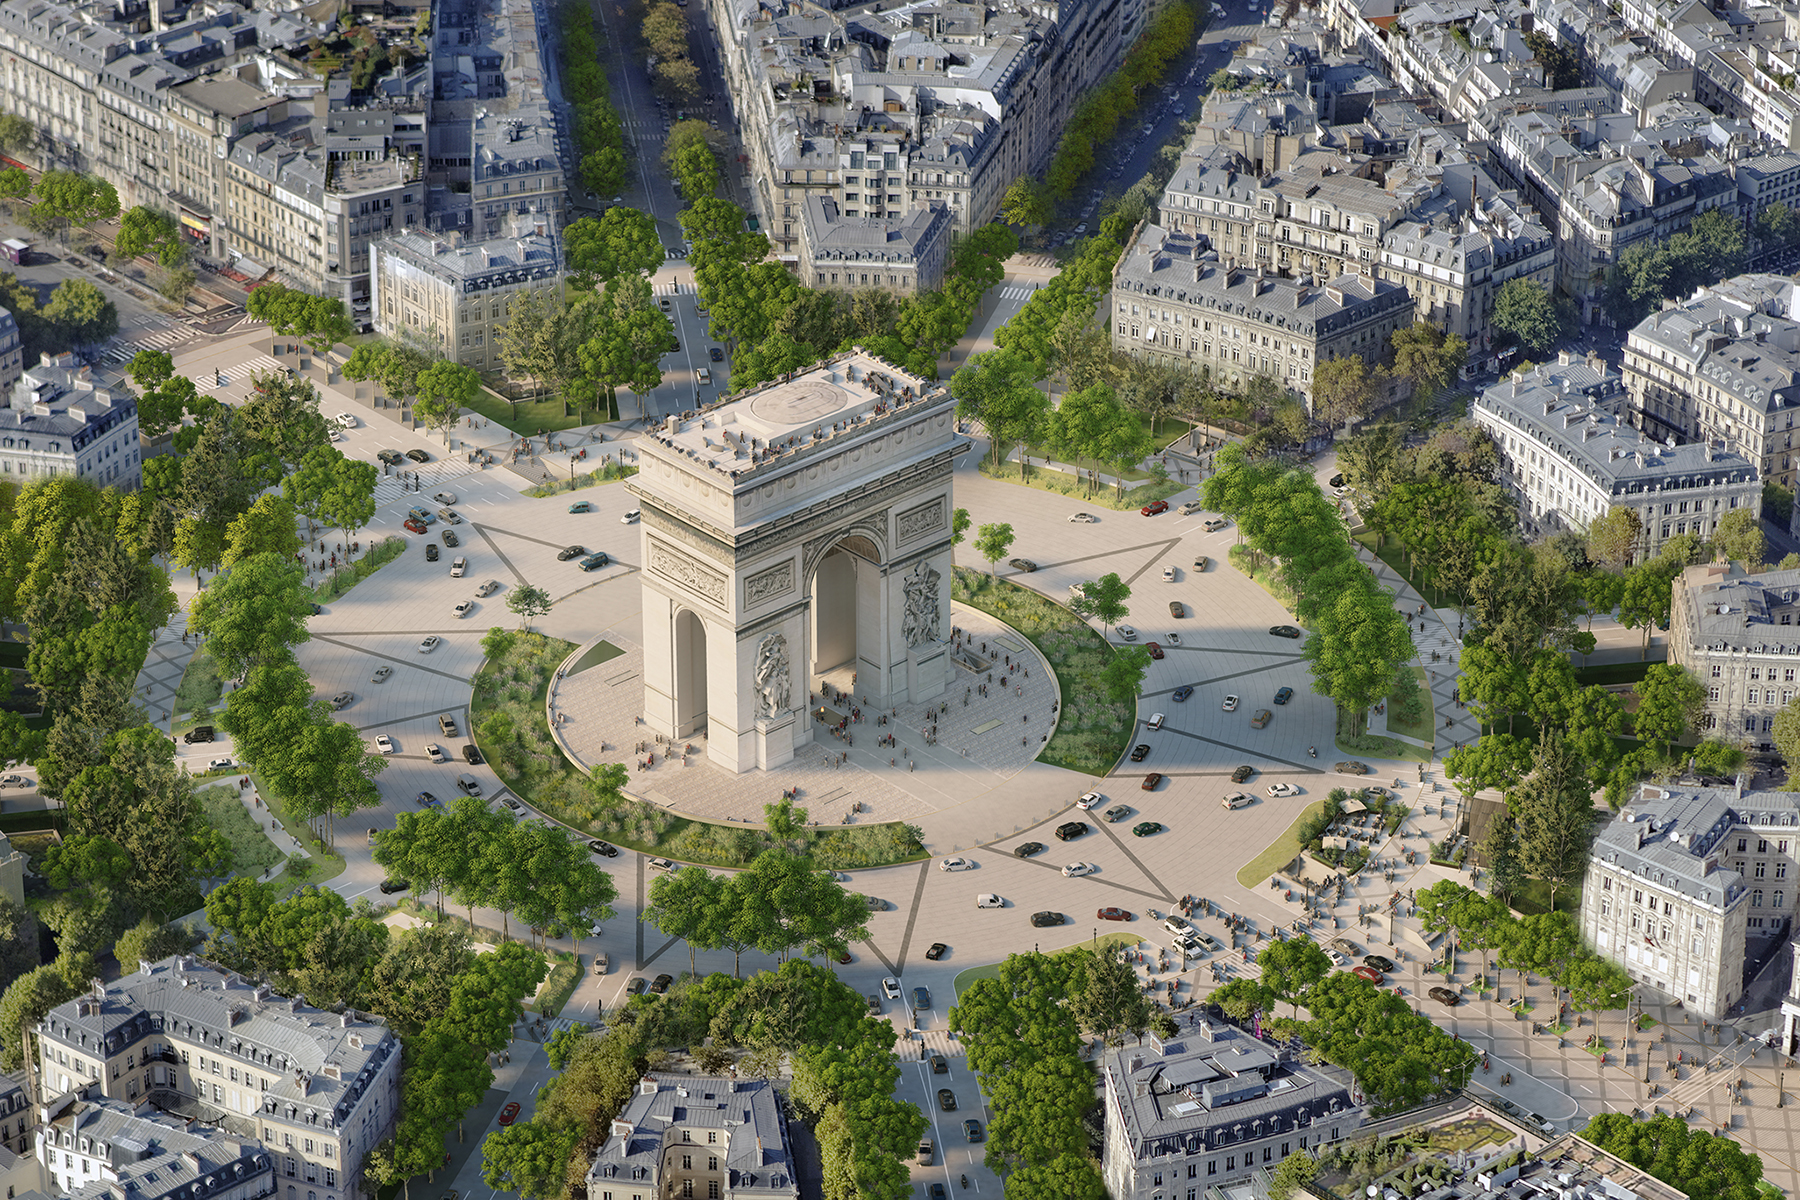 Parigi: gli Champs-Élysées diventeranno un gigantesco giardino dopo le Olimpiadi 2024